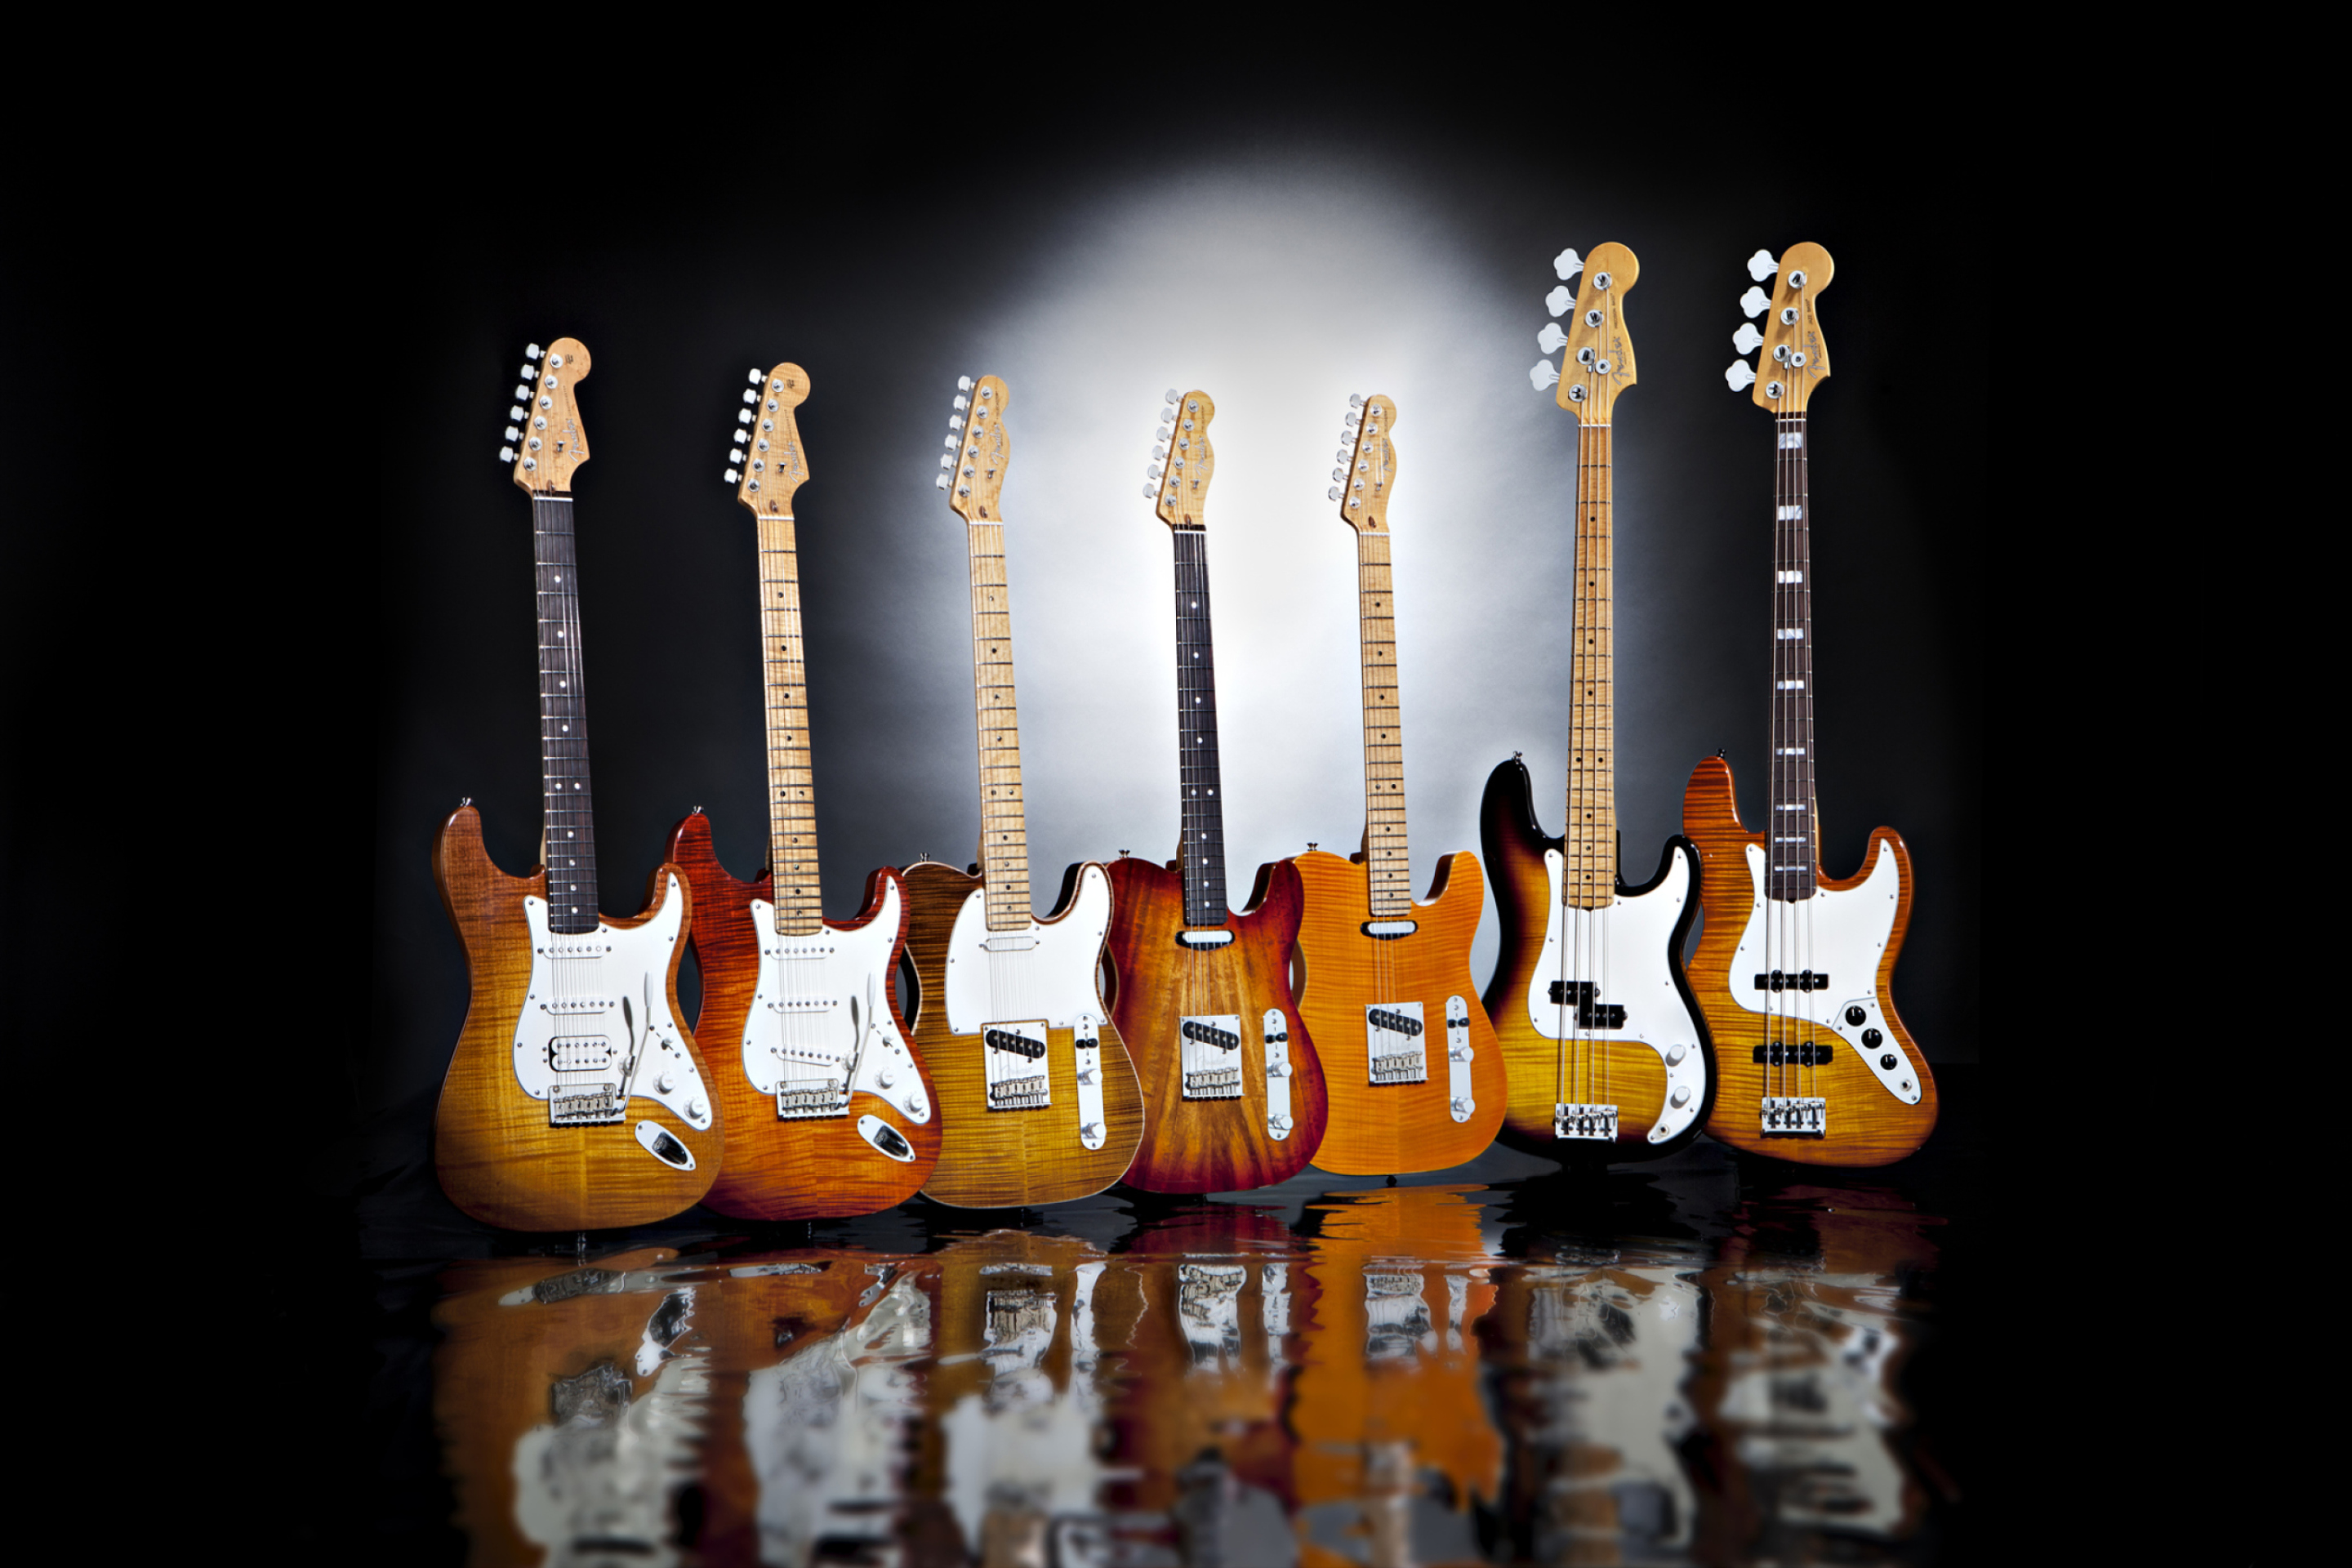 Das Fender Guitars Series Wallpaper 2880x1920